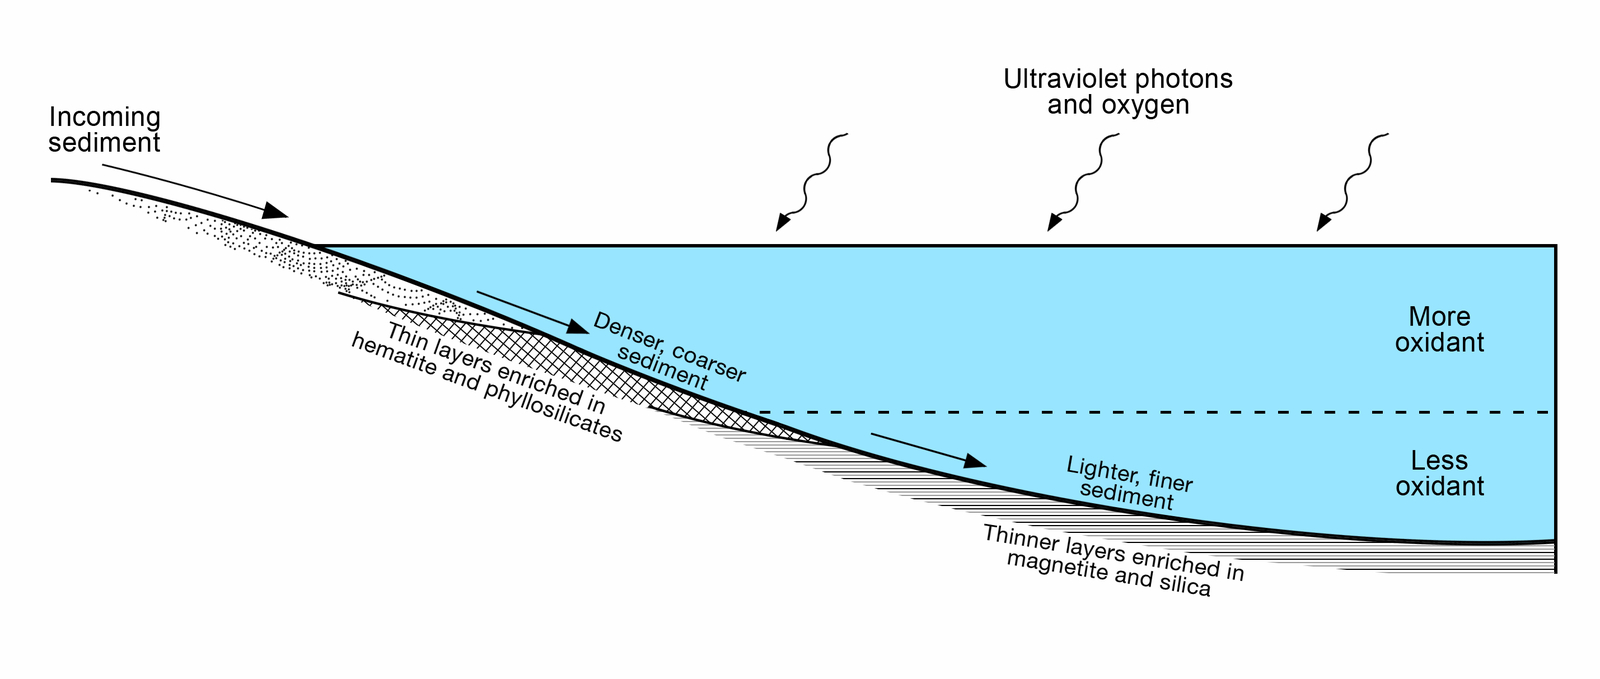 Diagram of Lake Stratification on Mars